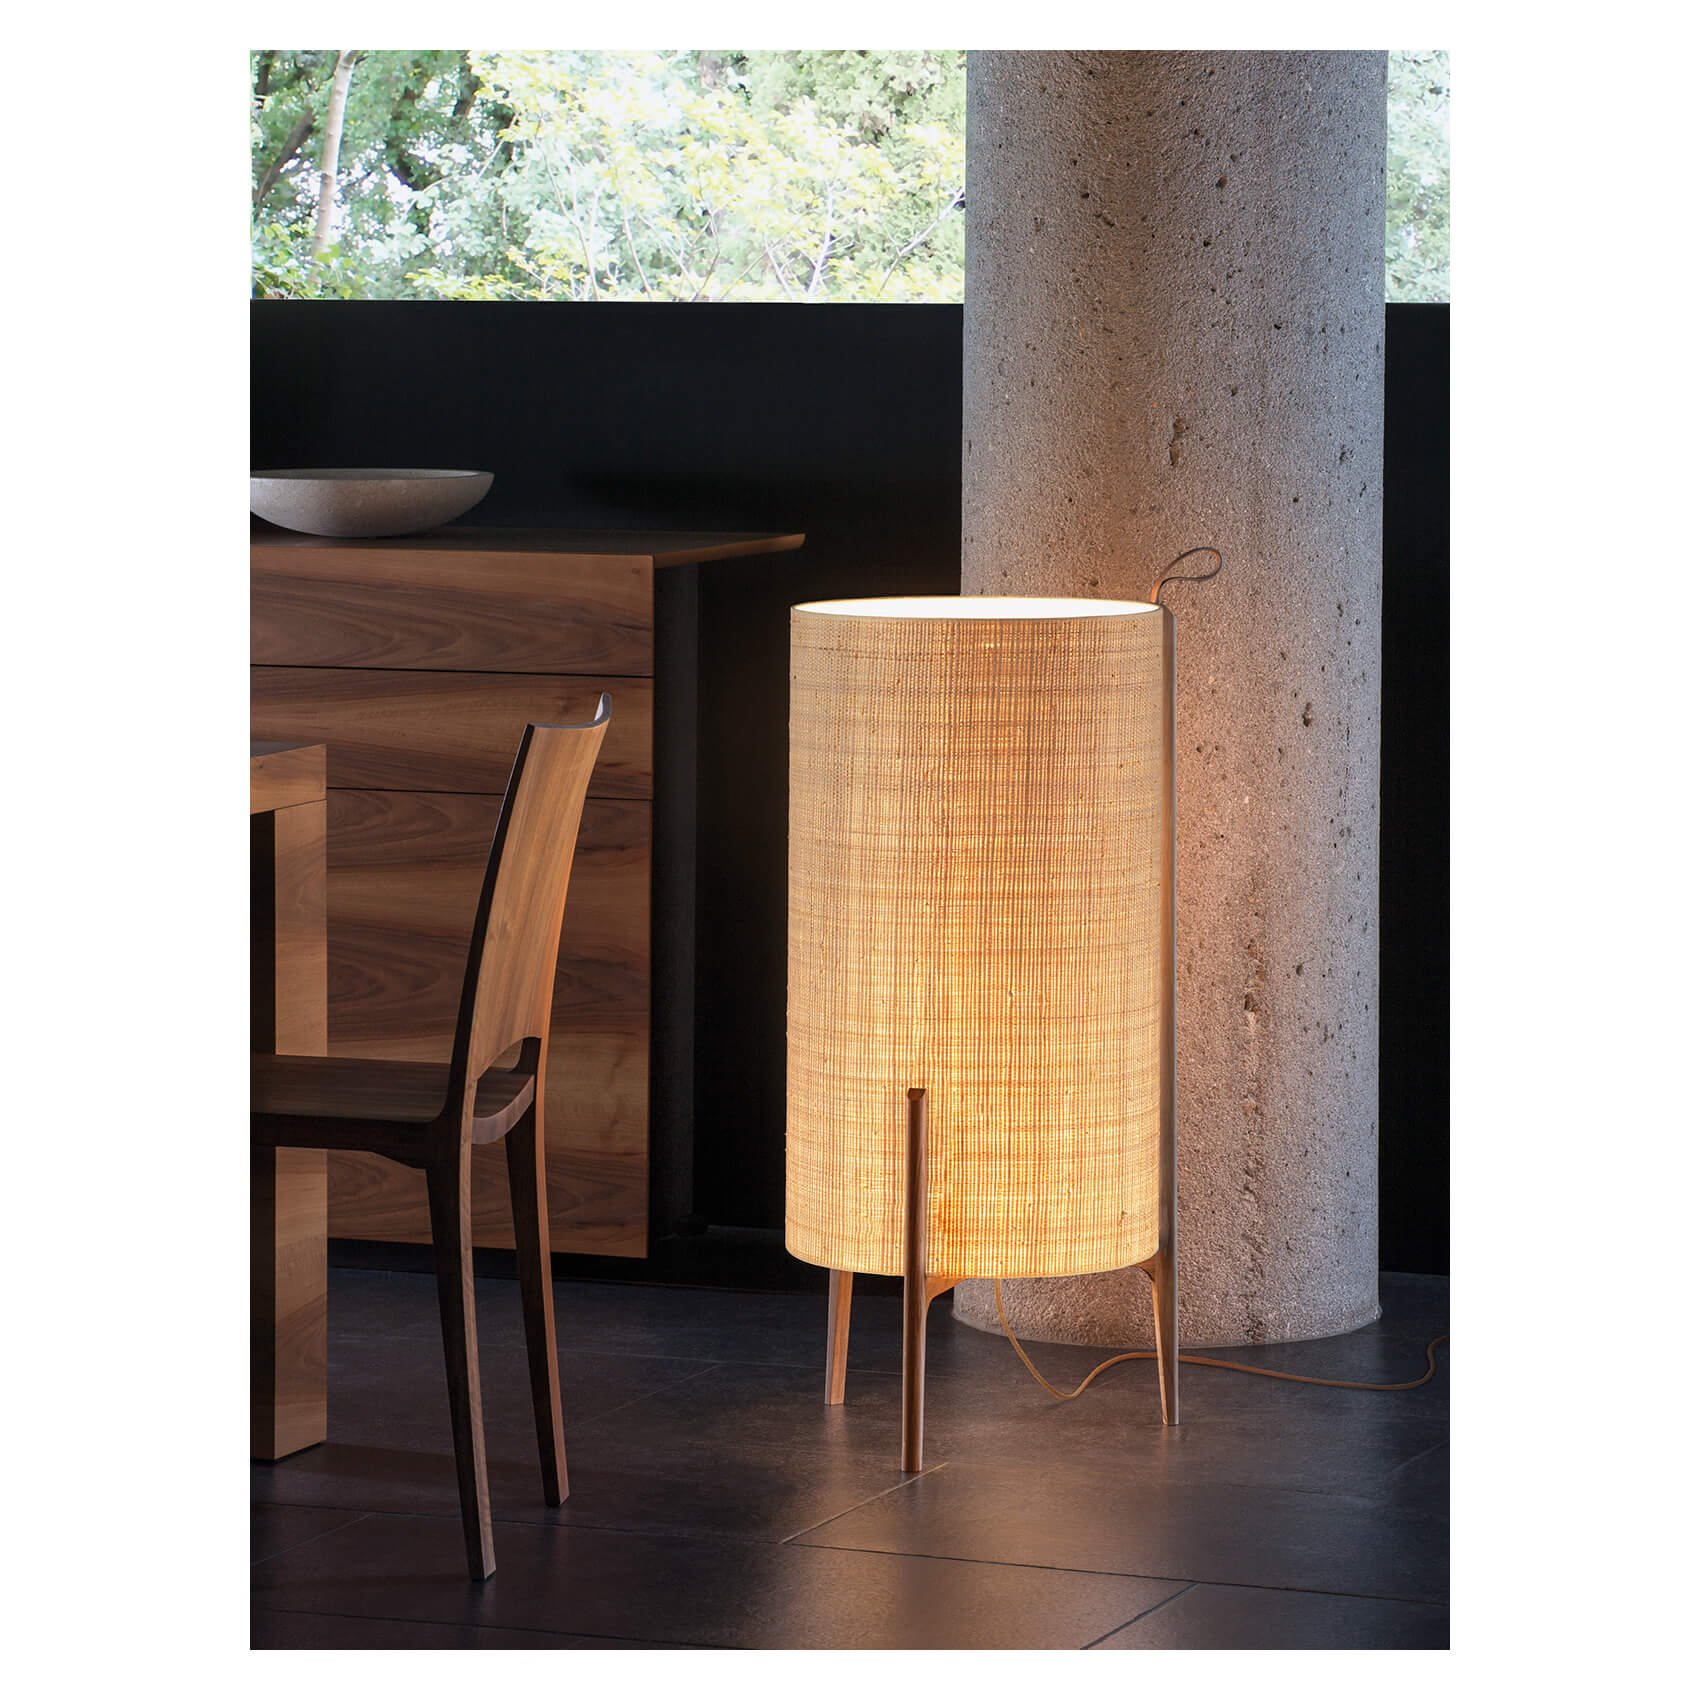 Floor-lamp-Greta-2261000-natural-oak-natural-fiber-shade-lifestyle-Carpyen.jpg